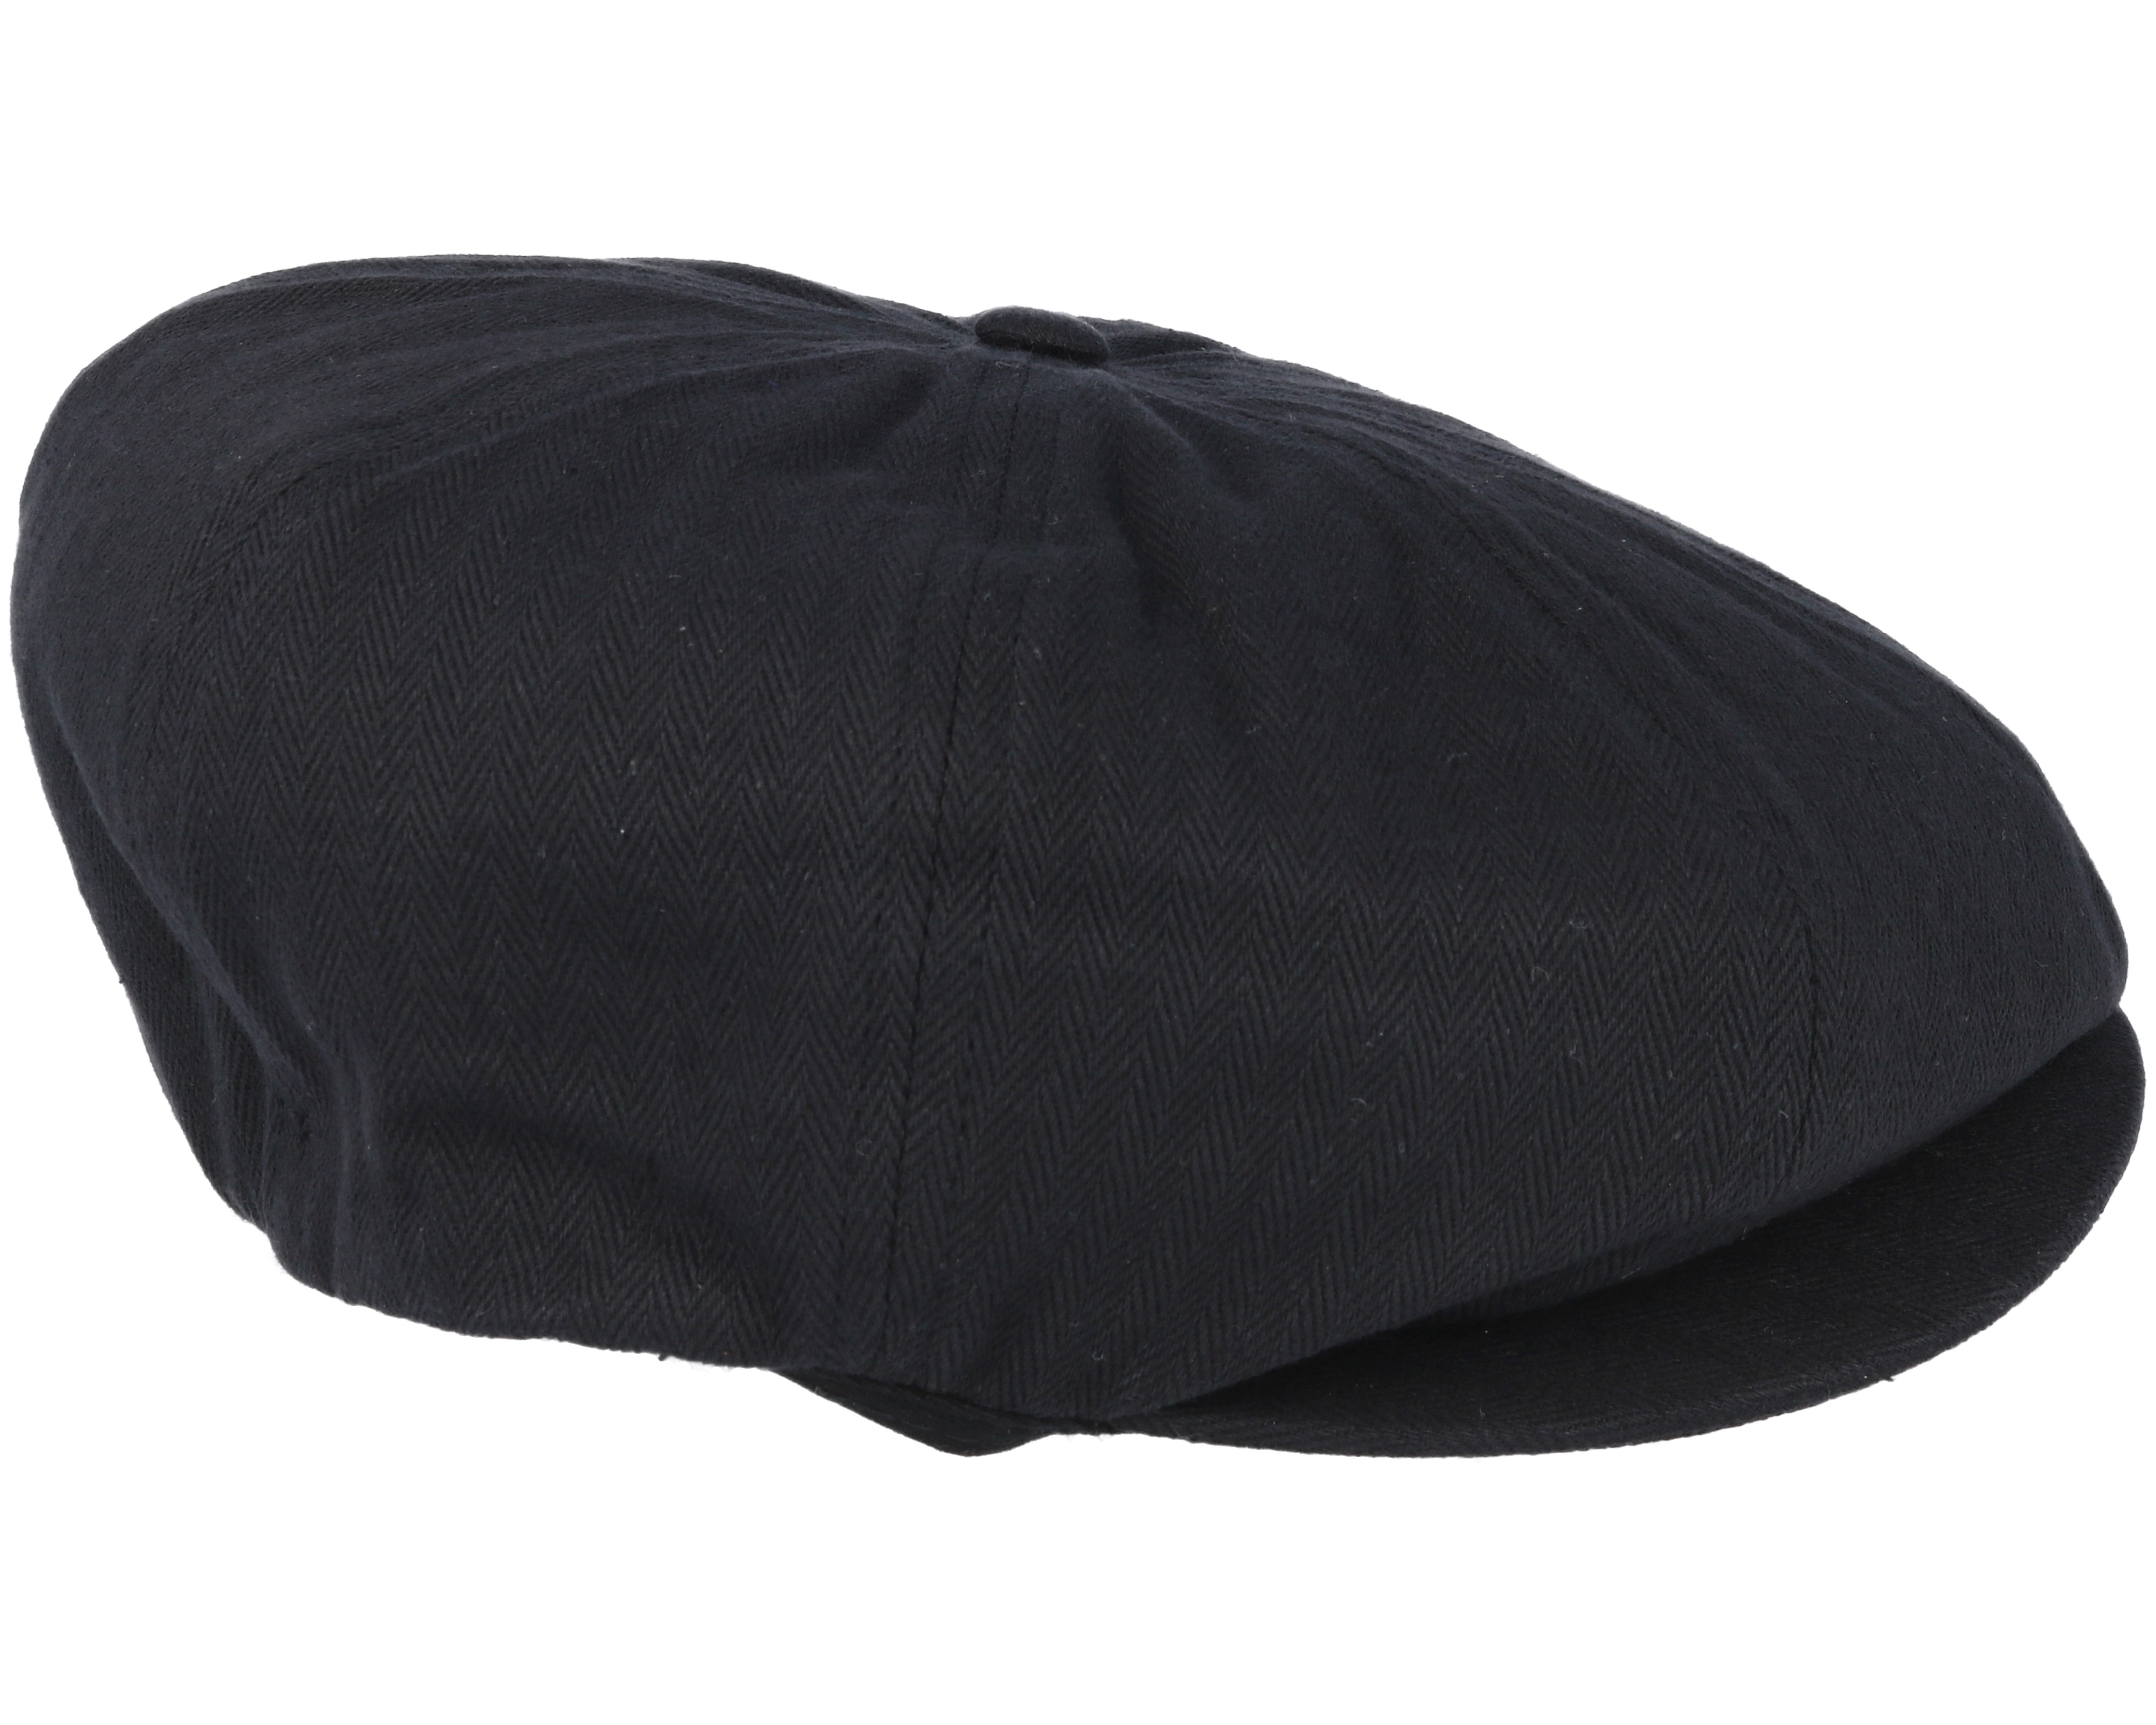 Brood Black Flat Cap - Brixton caps | Hatstore.co.uk